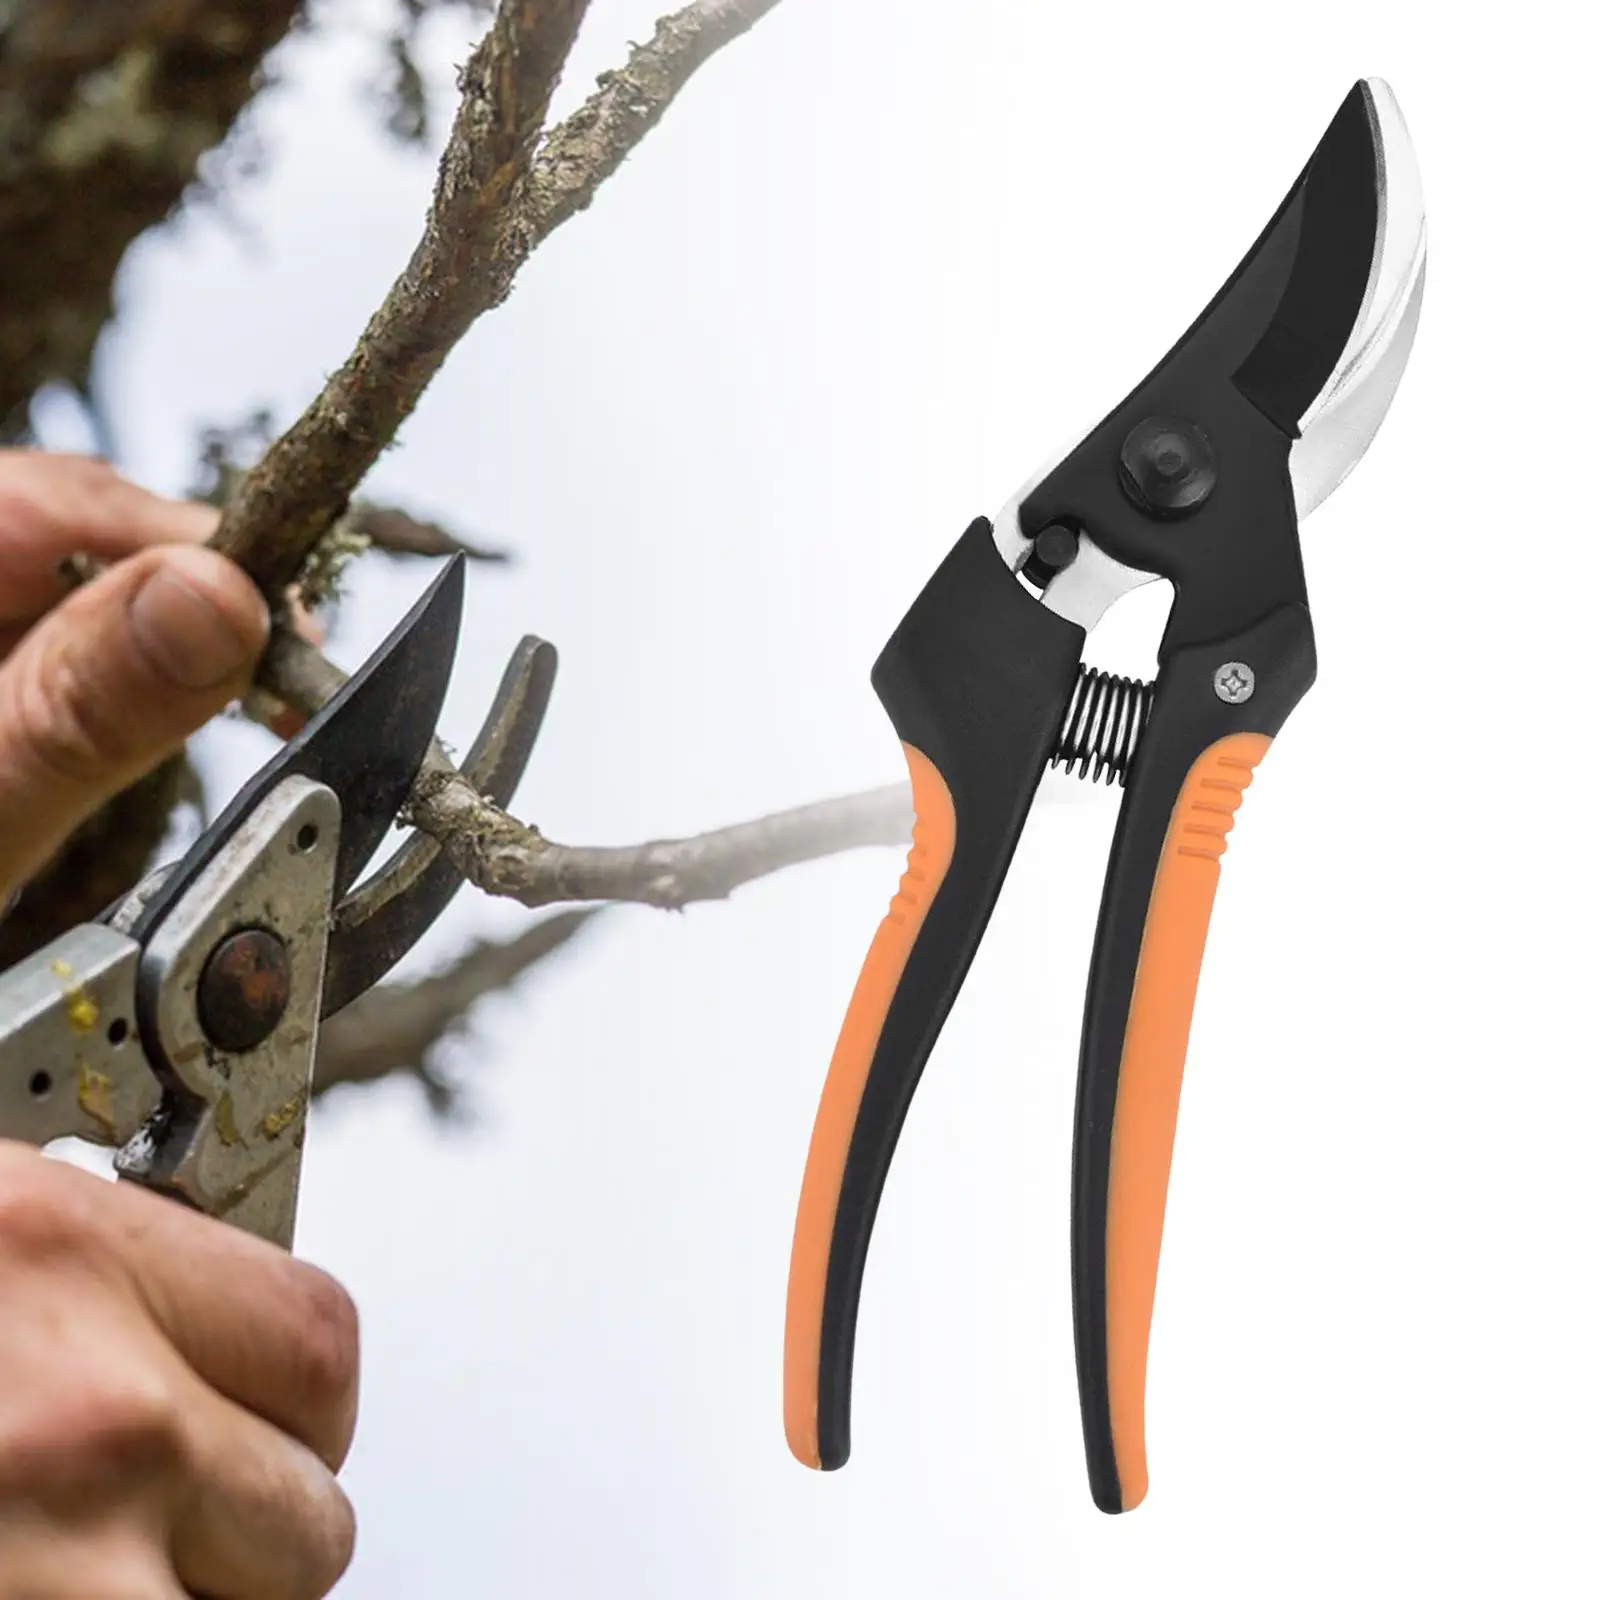 Multi Functional Pruners Hardware Tools steel Cutter Manual Pruning Shear Pruning Snip Pofessional for Gardening Tool